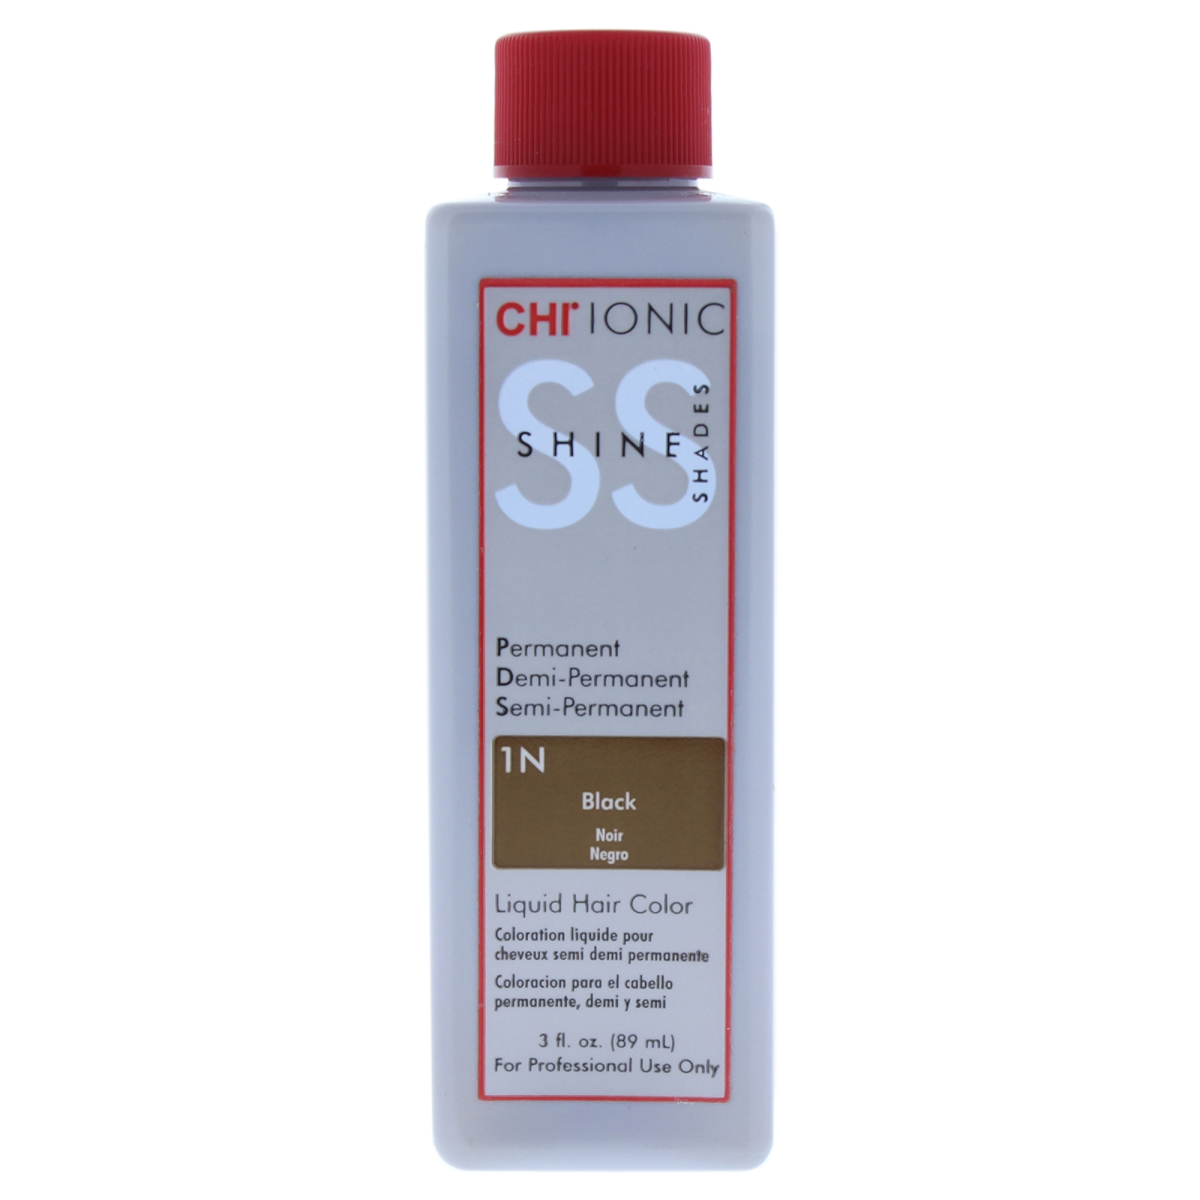 I0084005 Ionic Shine Shades Liquid Hair Color For Unisex - 1n Black - 3 Oz